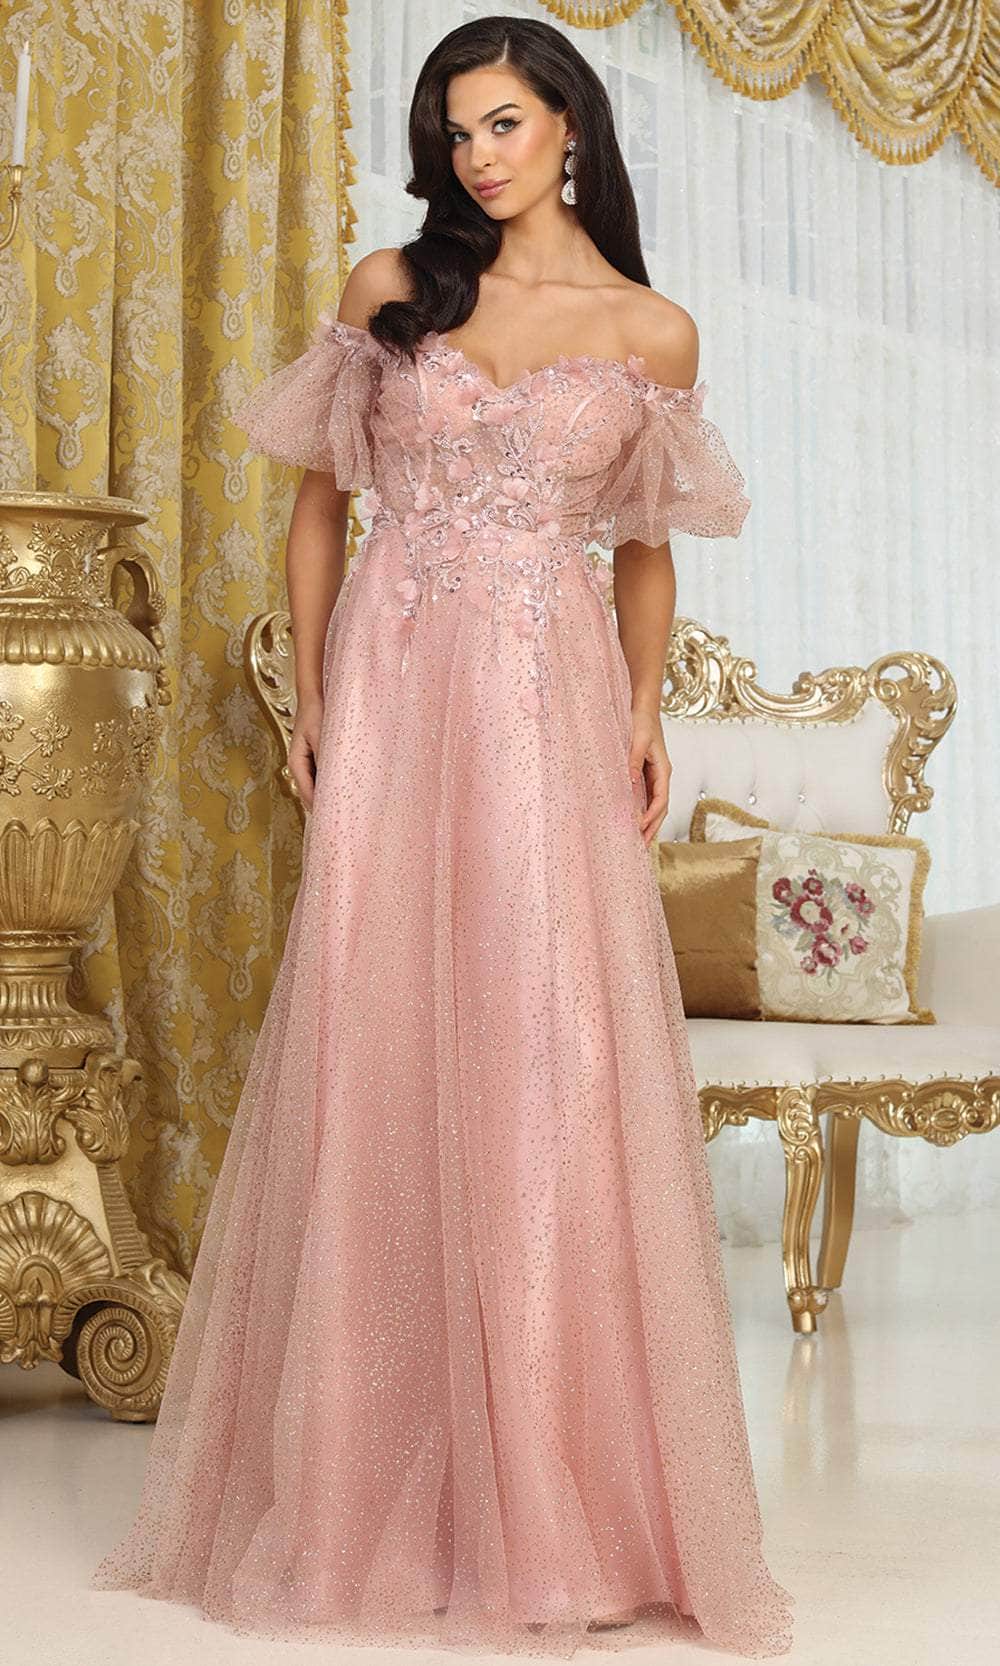 May Queen MQ2033 - Puff Sleeve Off Shoulder Evening Dress Evening Dresses 4 / Rose Gold